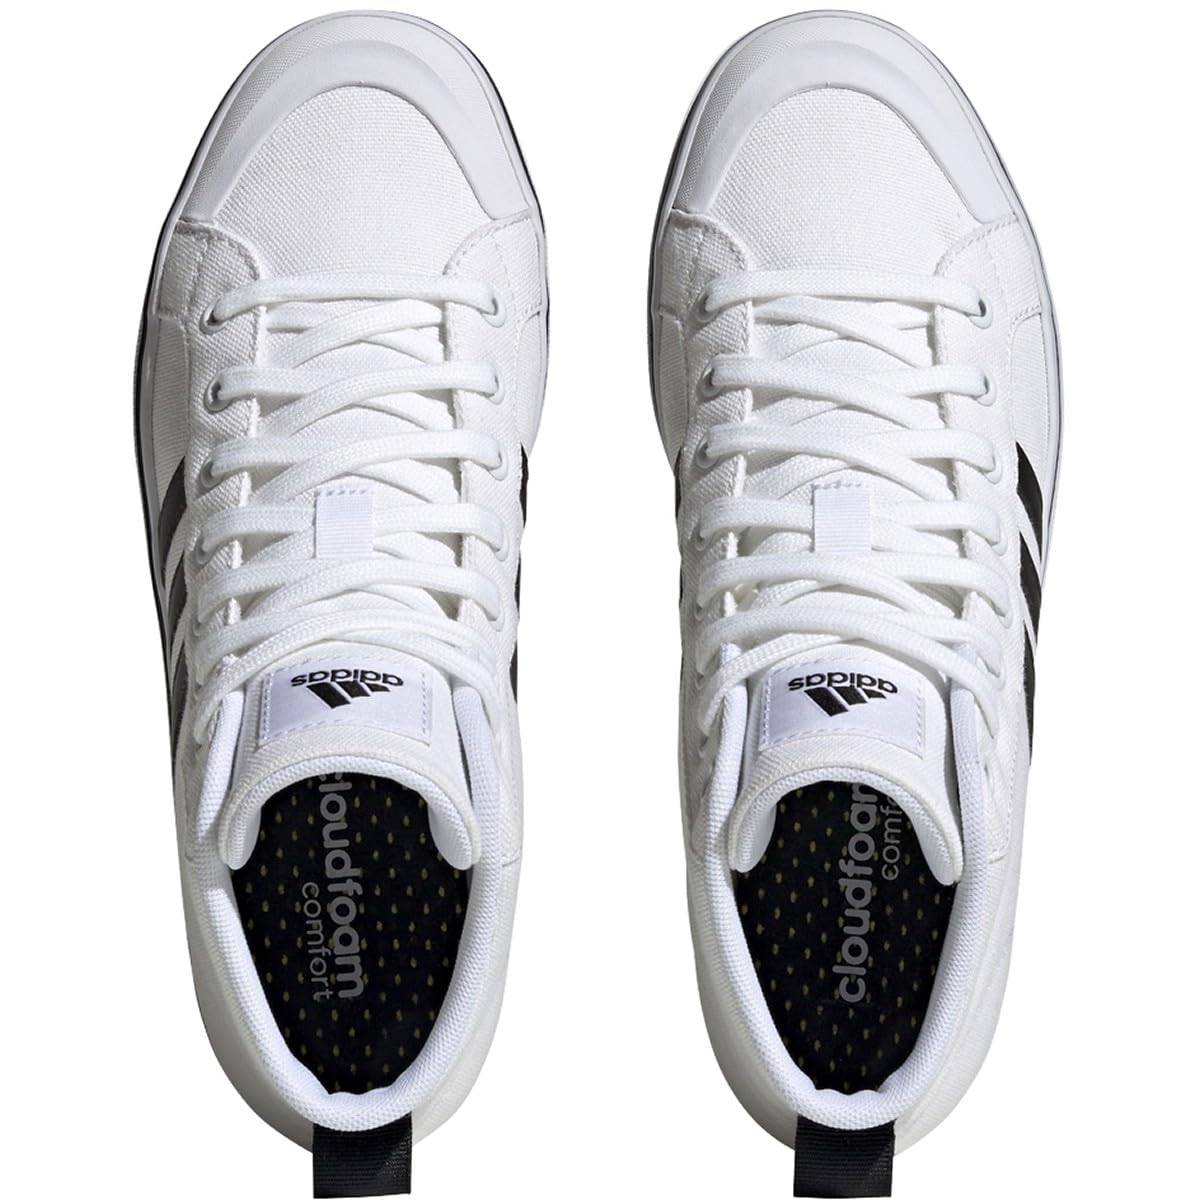 adidas Women's Bravada 2.0 Lifestyle Skateboarding Canvas Mid-Cut Skate Shoe, White/Black/White, 9